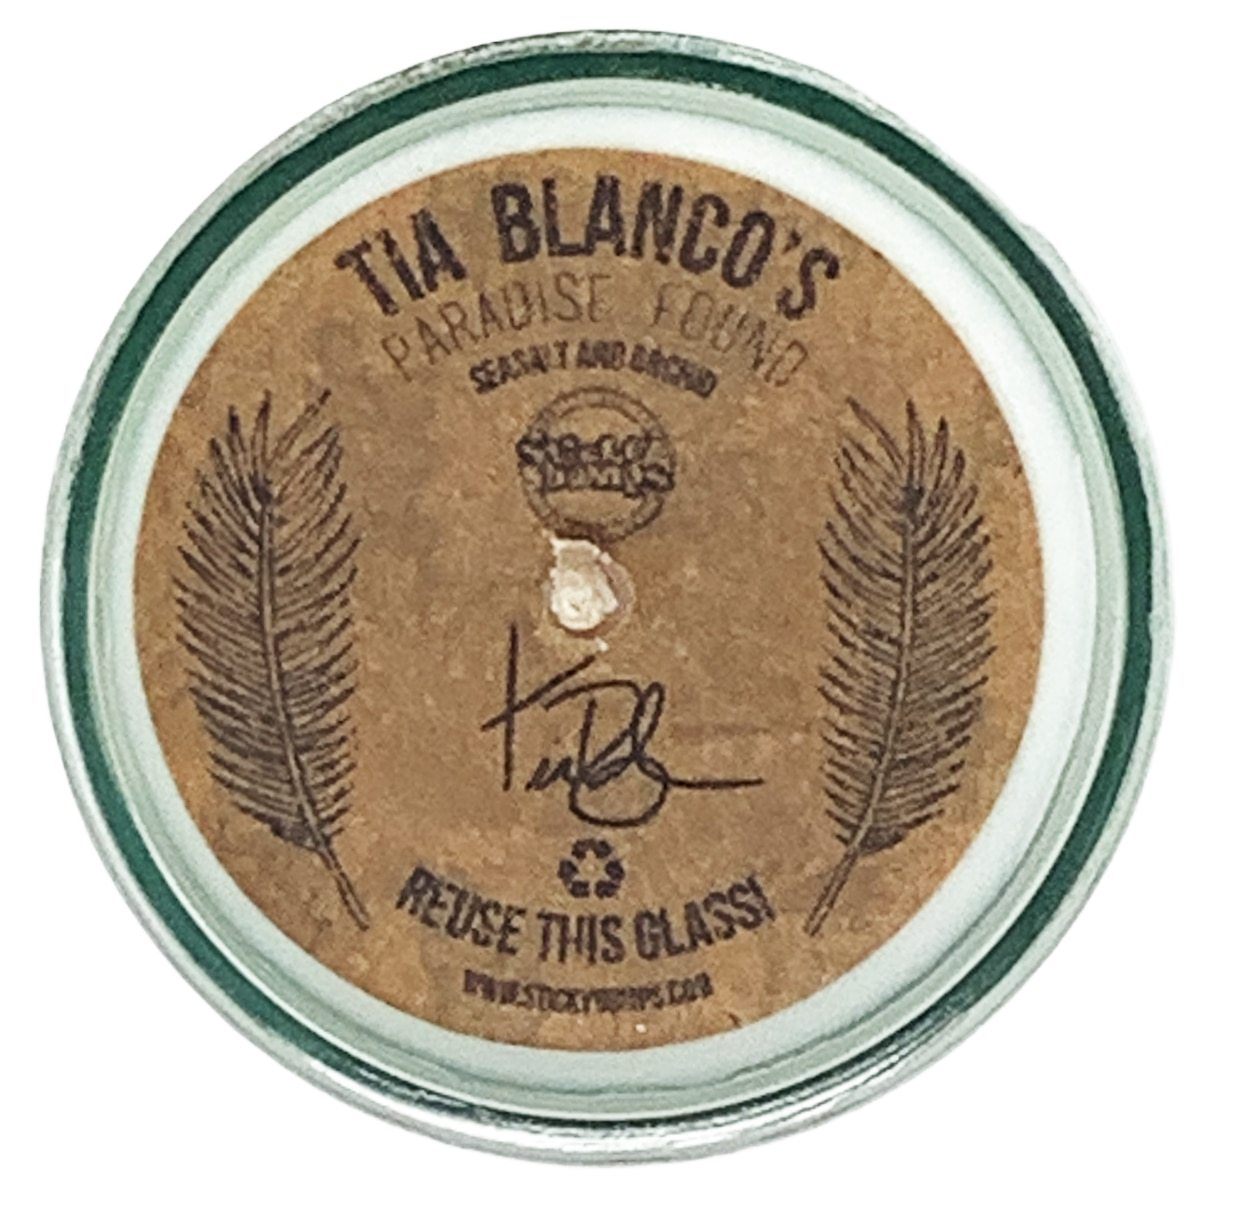 Signature Series - Tia Blanco 8 oz Glass | Paradise Found - Sea Salt + Orchid